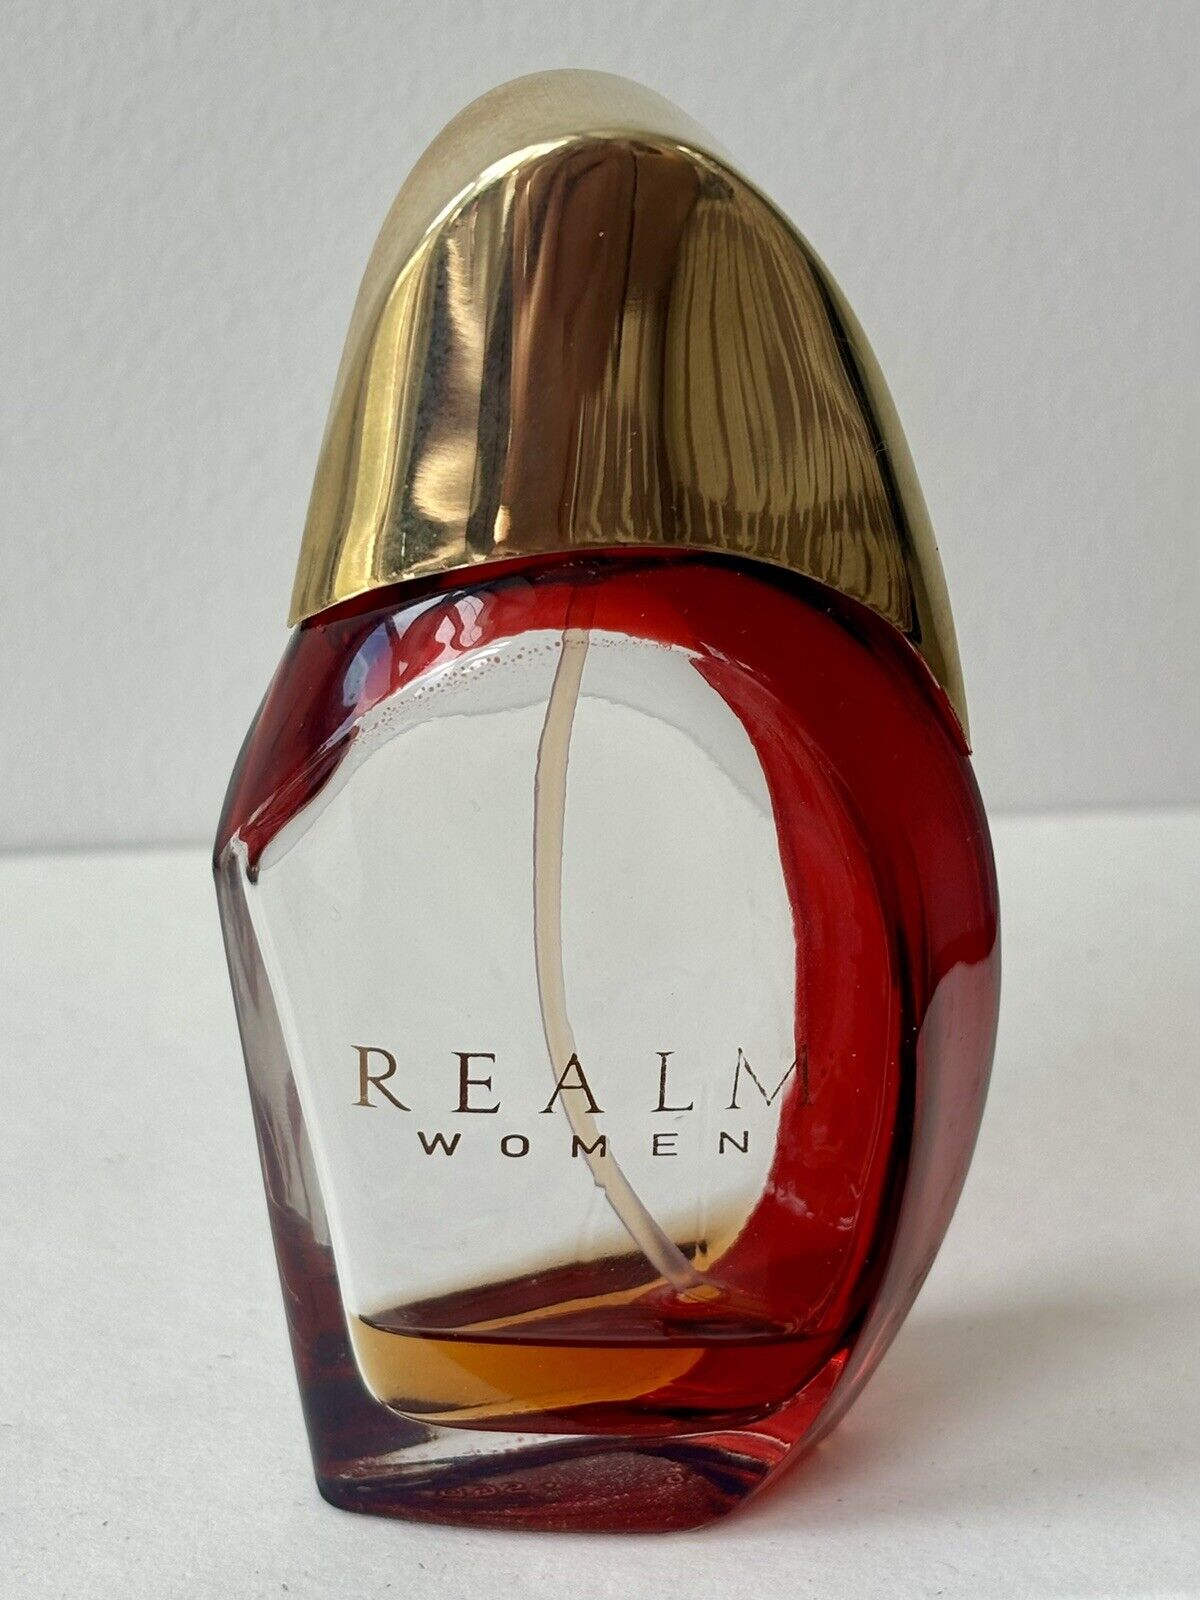 REALM Women Vintage Eau de Toilette 1.7 oz Spray Perfume Mostly Used